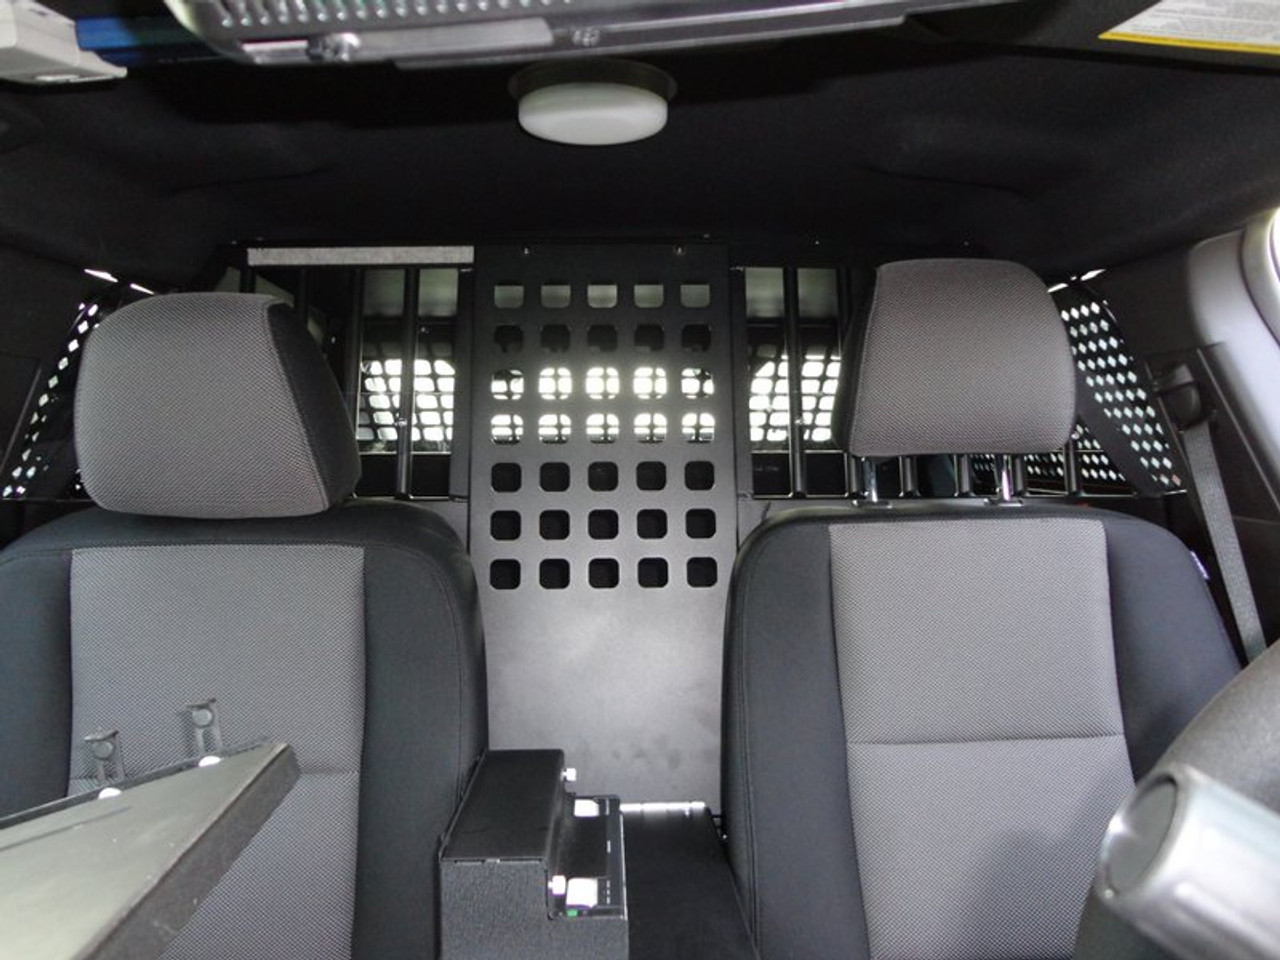 American Aluminum Ford Interceptor Sedan (Taurus) EZ Rider K9 Law Enforcement Dog Car Kennel Transport System, Insert, Black or Aluminum Finish, includes rubber mat, door panels, and window guards, 2013-2019